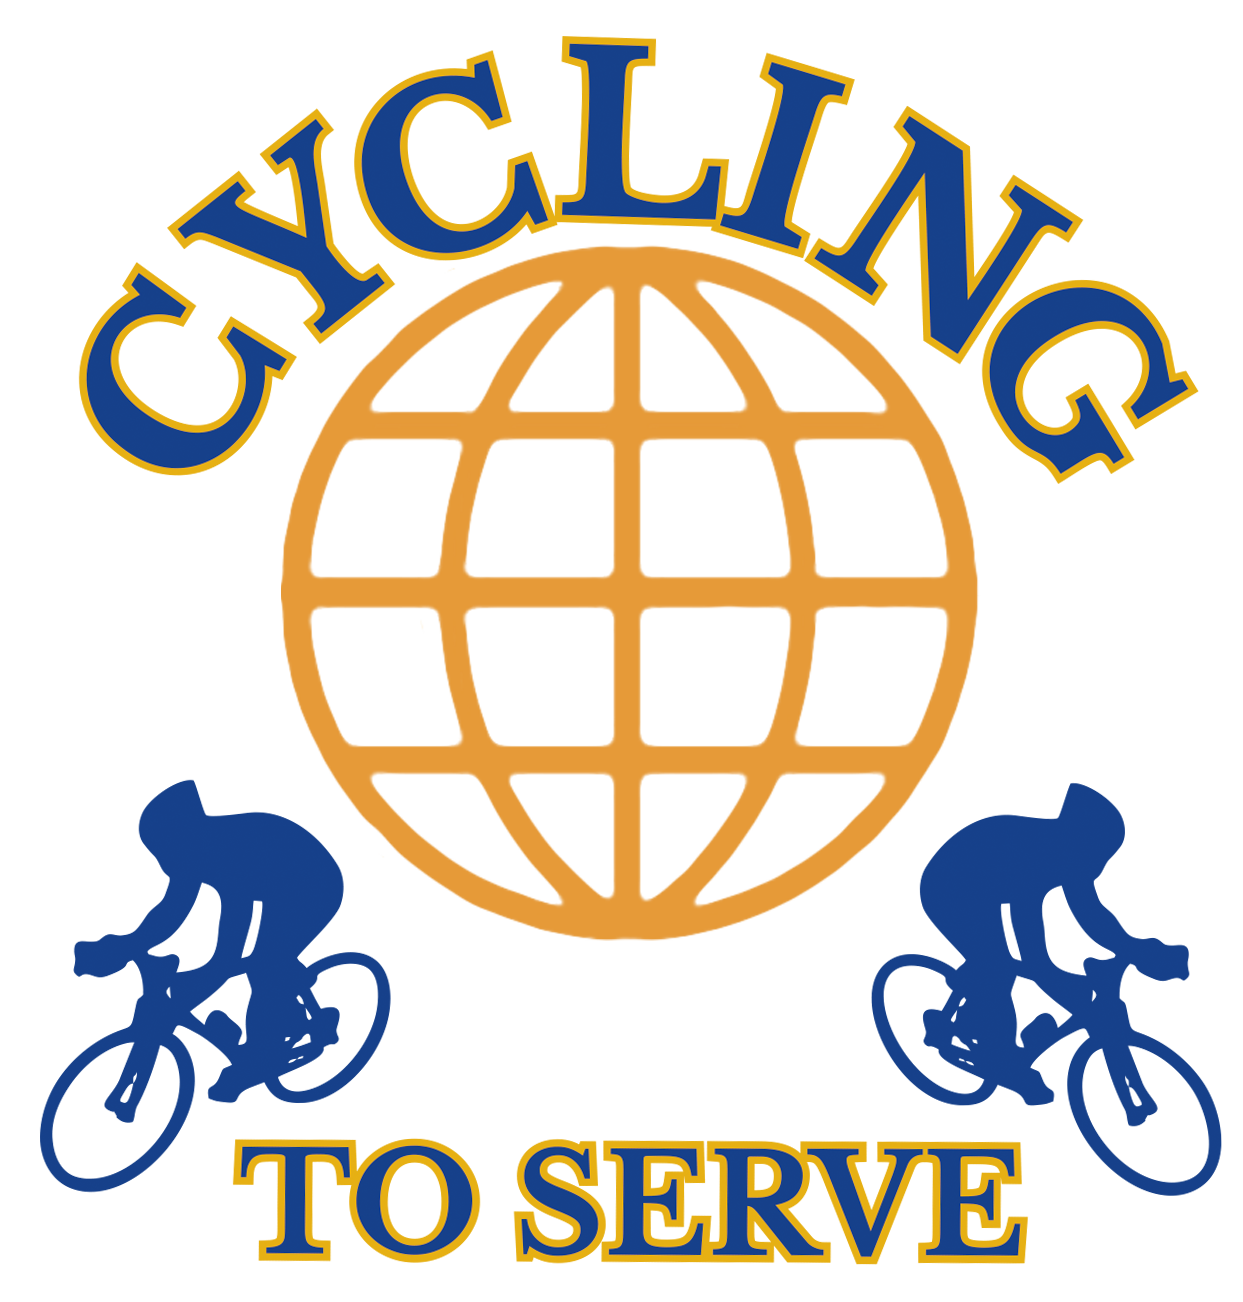 2022, radfahren, cycling to serve, logo